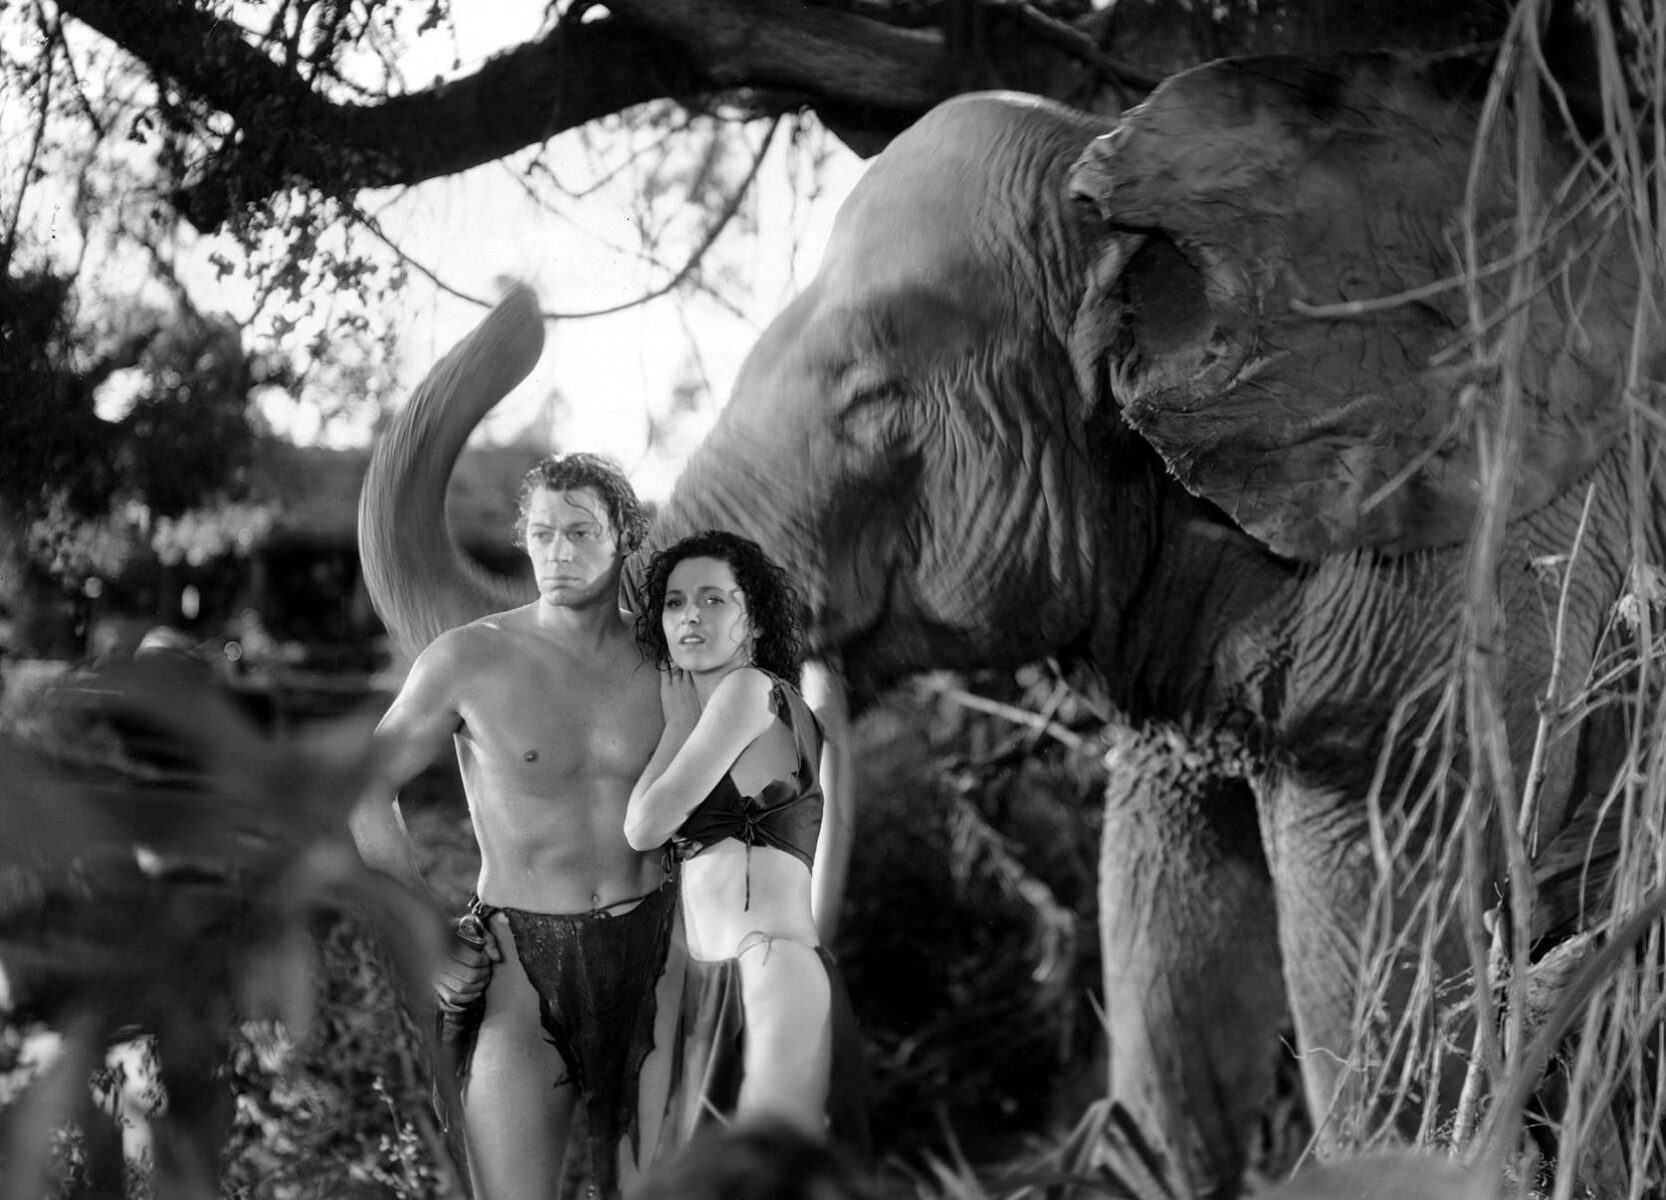 Tarzan and his mate